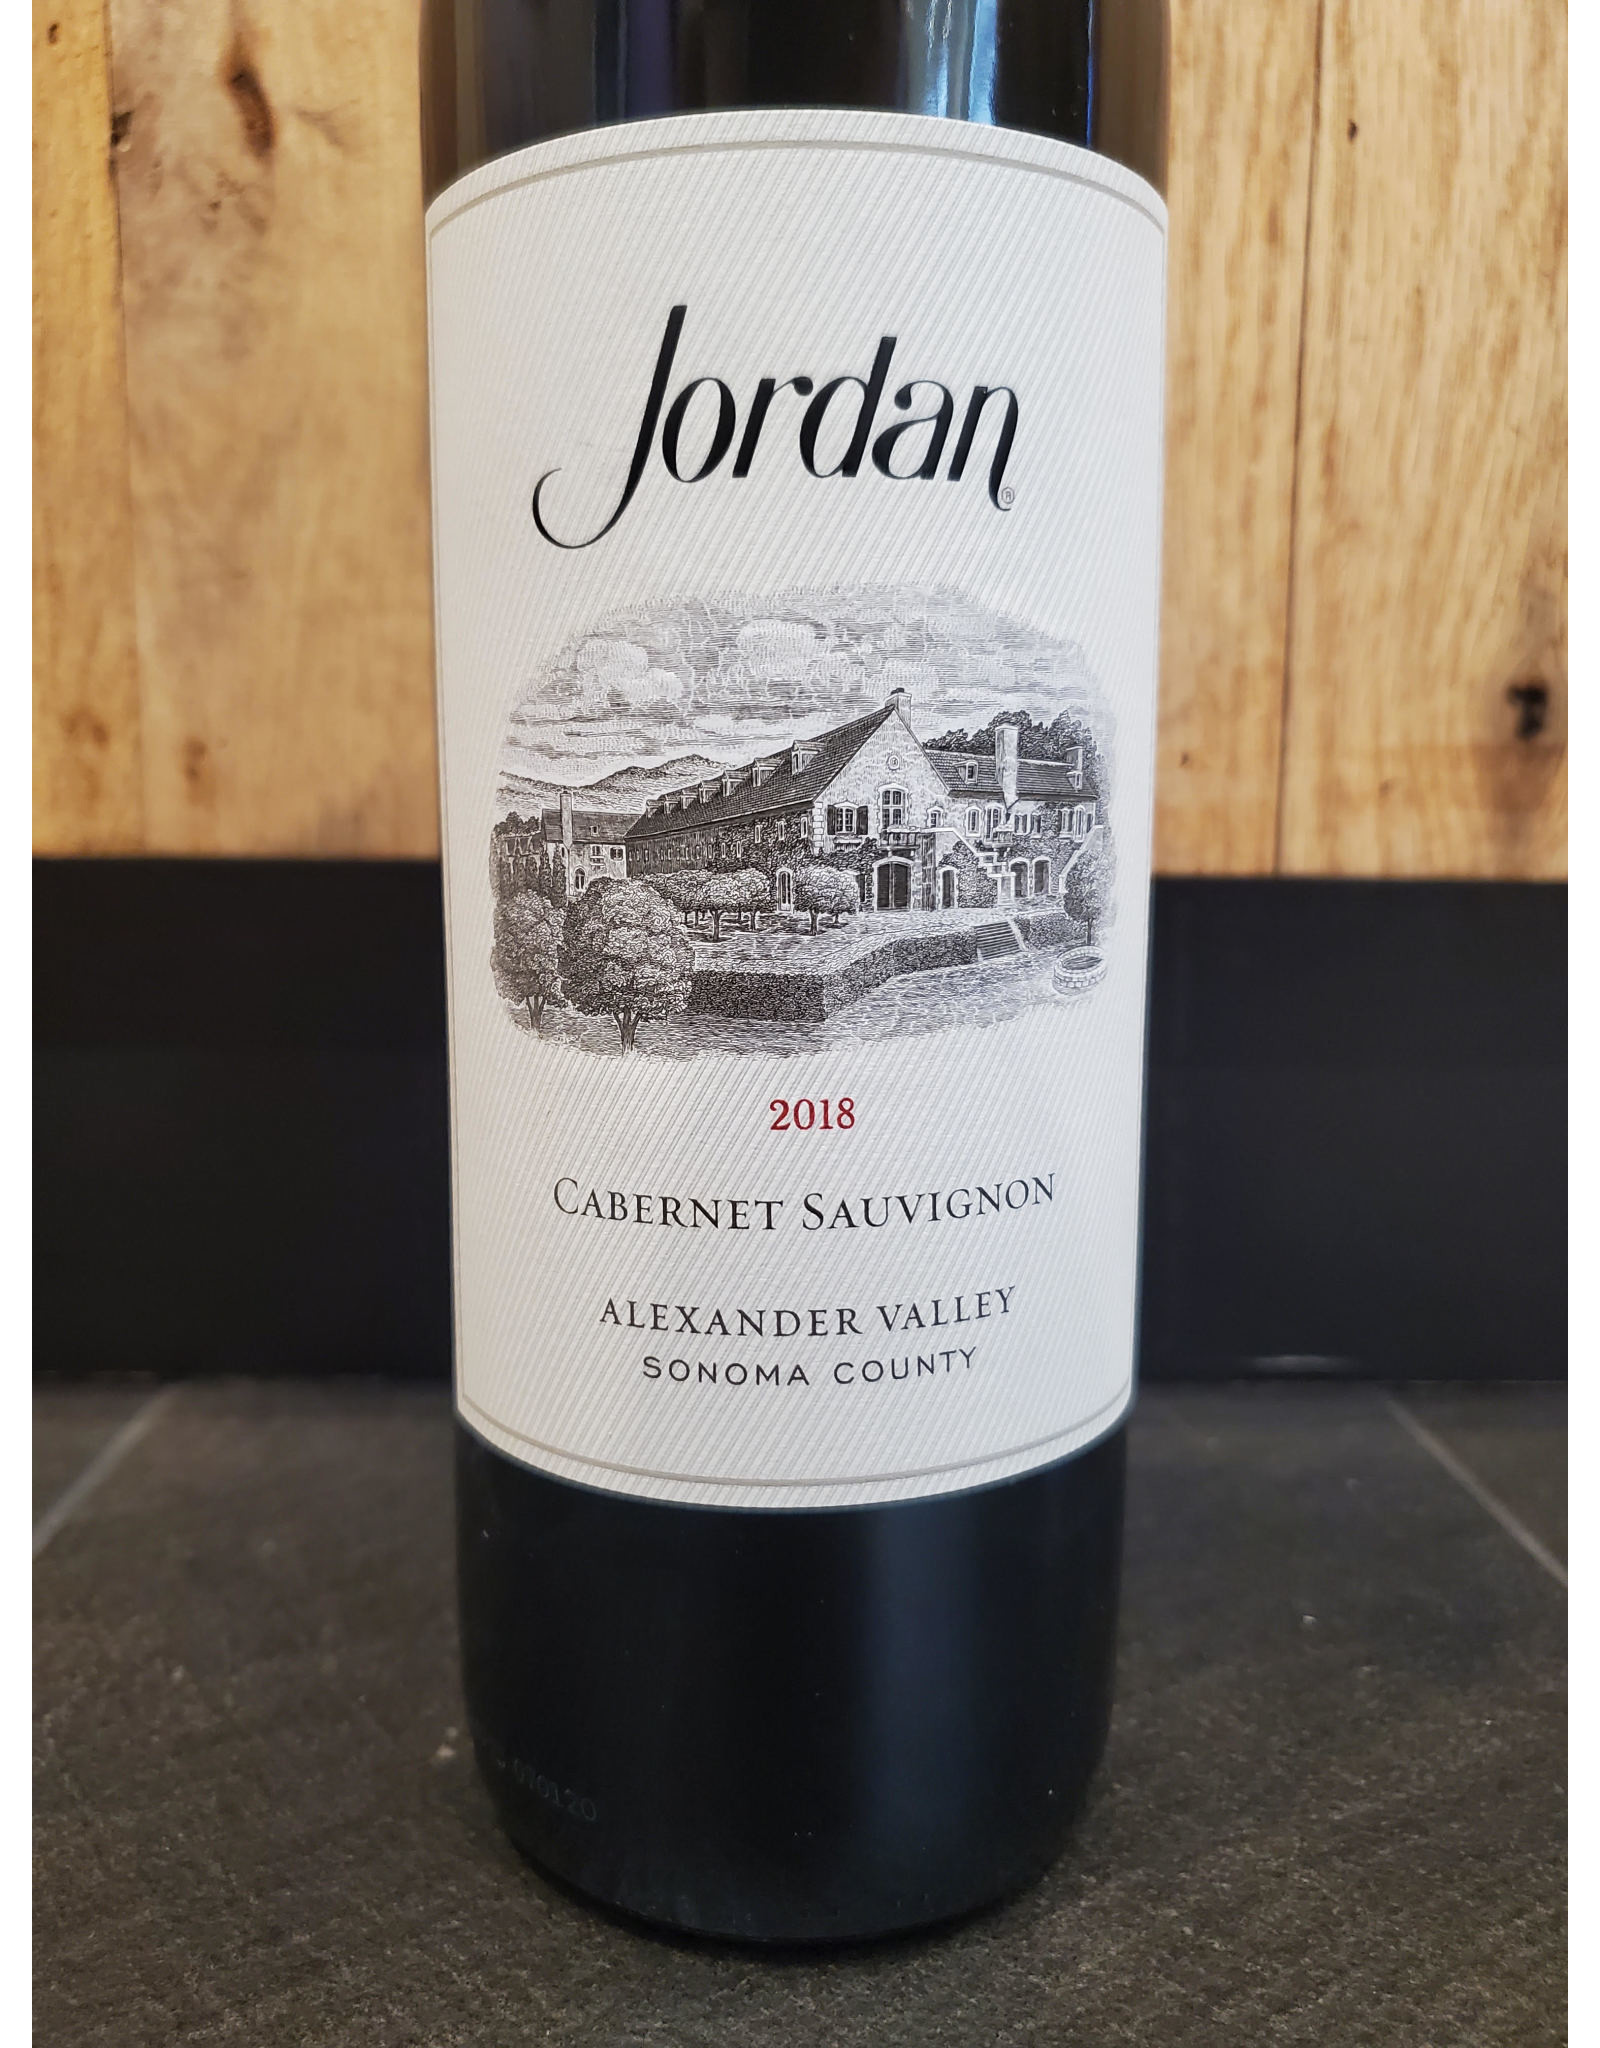 Jordan, Cabernet Sauvignon, 2018